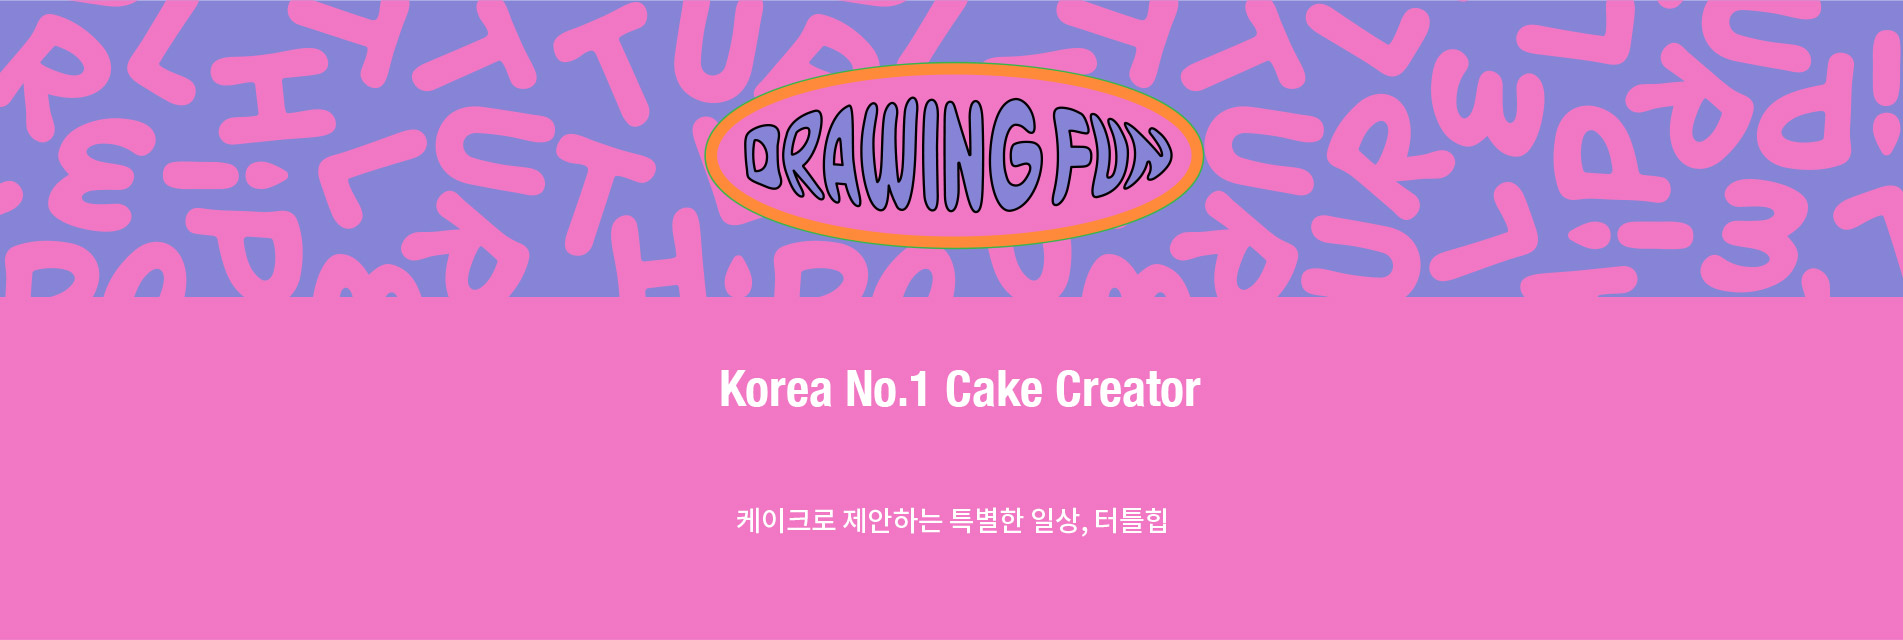 DRAWING FUN, Korea no.1 cake creator TURTLEHIP. 평범한 일상이 지겹고 특별함이 서툰 고객님들에게 케이크로 특별한 일상을 제안 합니다.